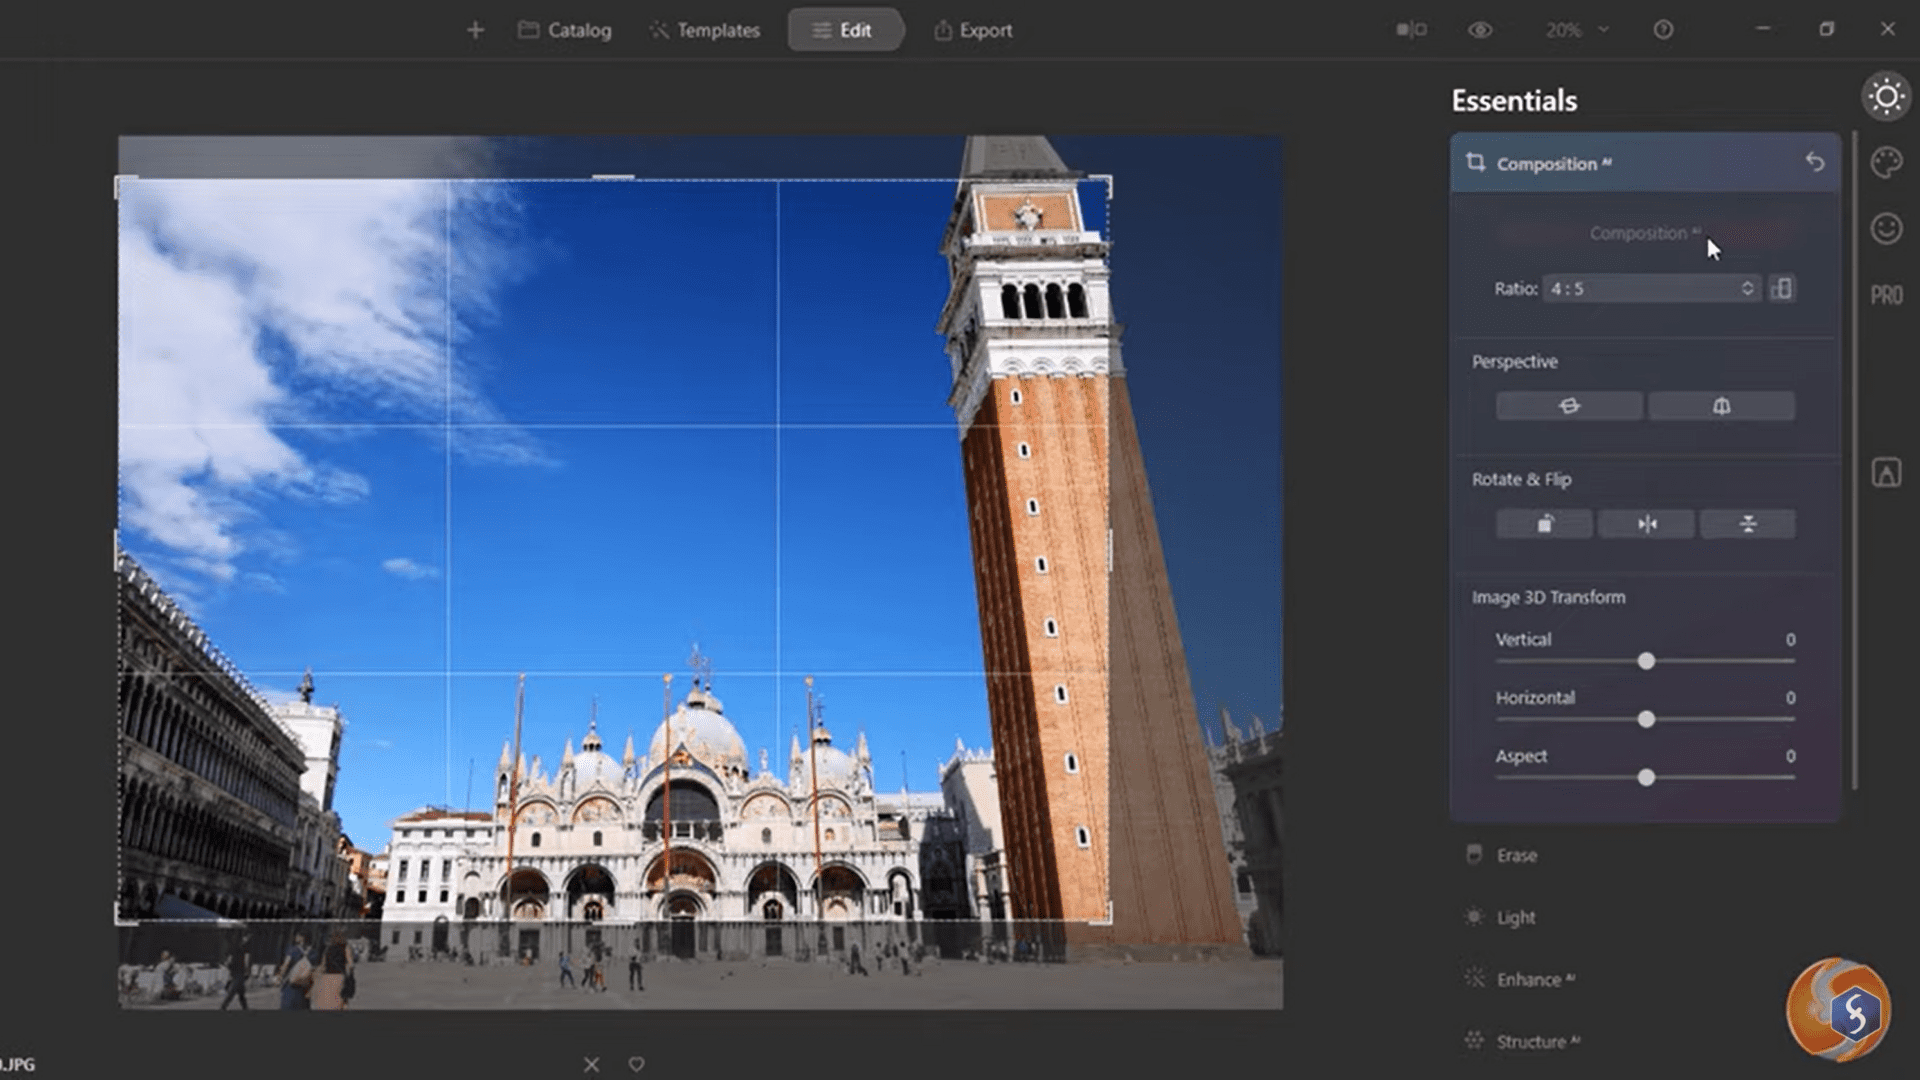 Adobe Photoshop 替代品 - Luminar AI